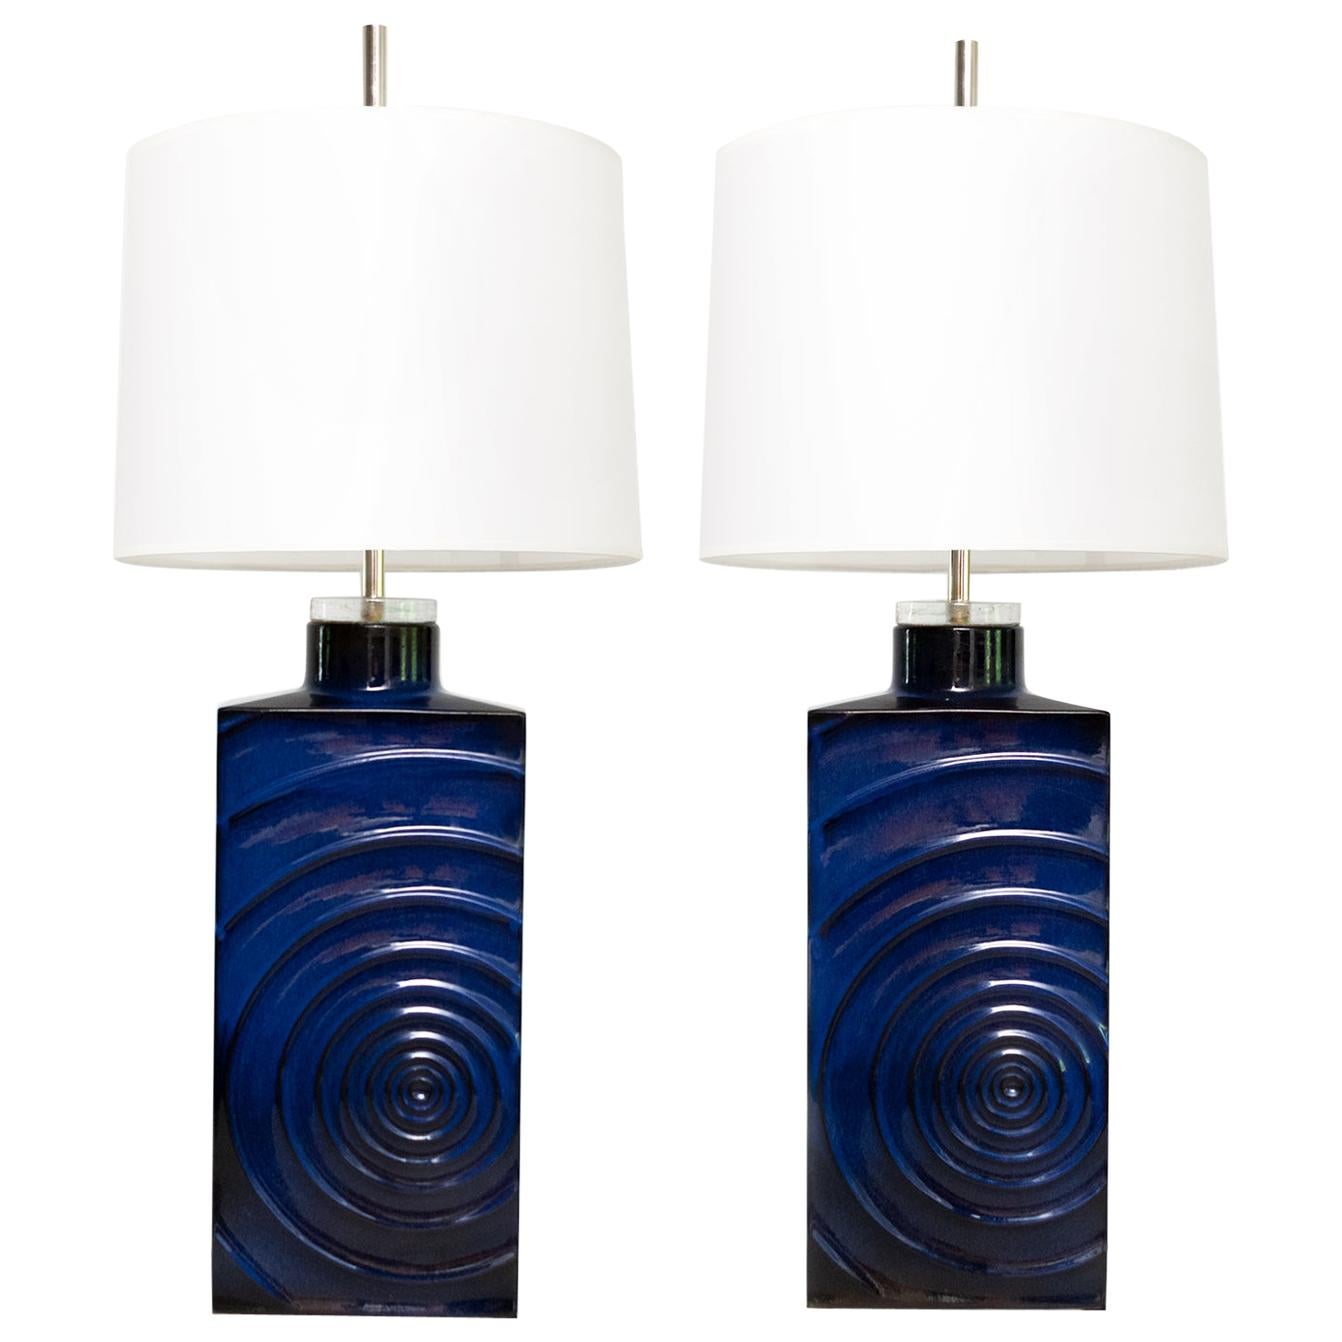 Pair of Cari Zalloni  "Zyklon" Mid-century Modern lamps for Steuler